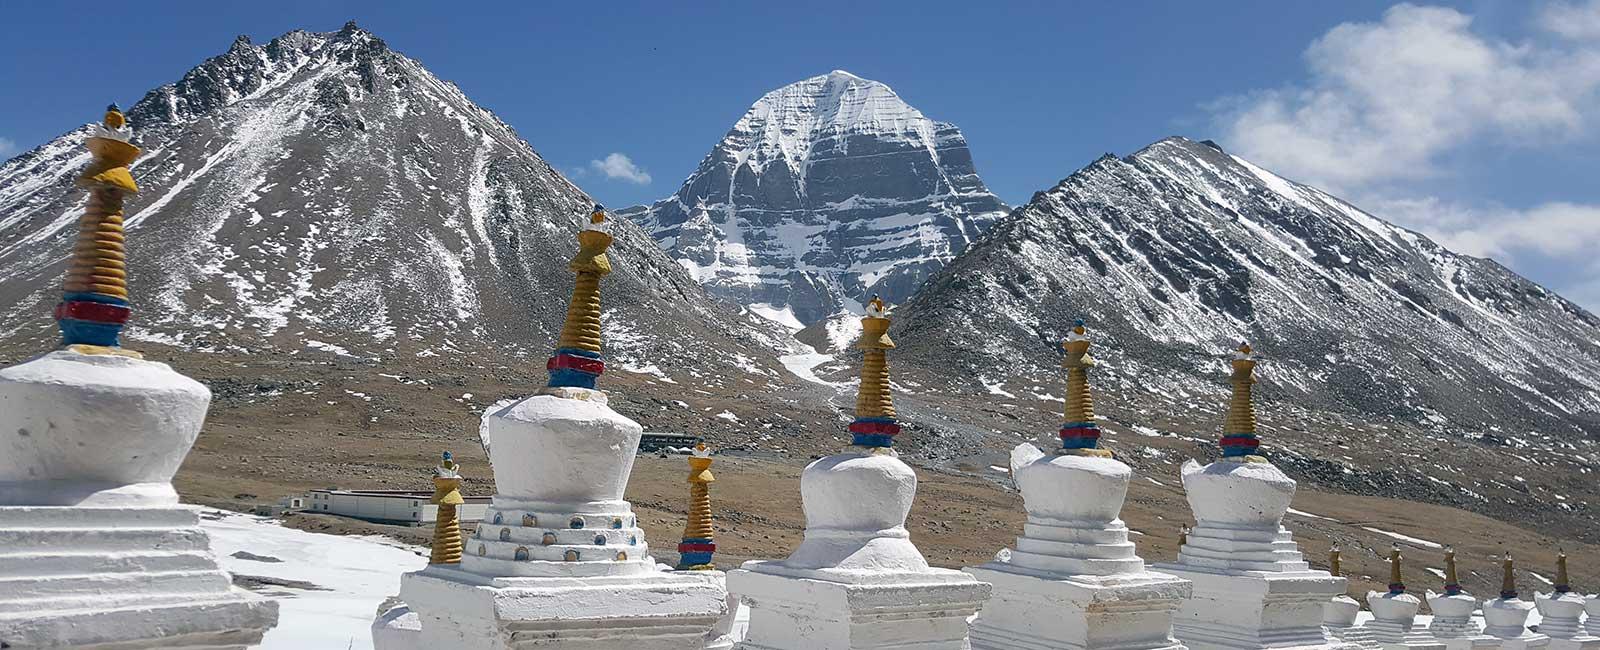 Lhasa Kailash Overland Tour - 18 Days